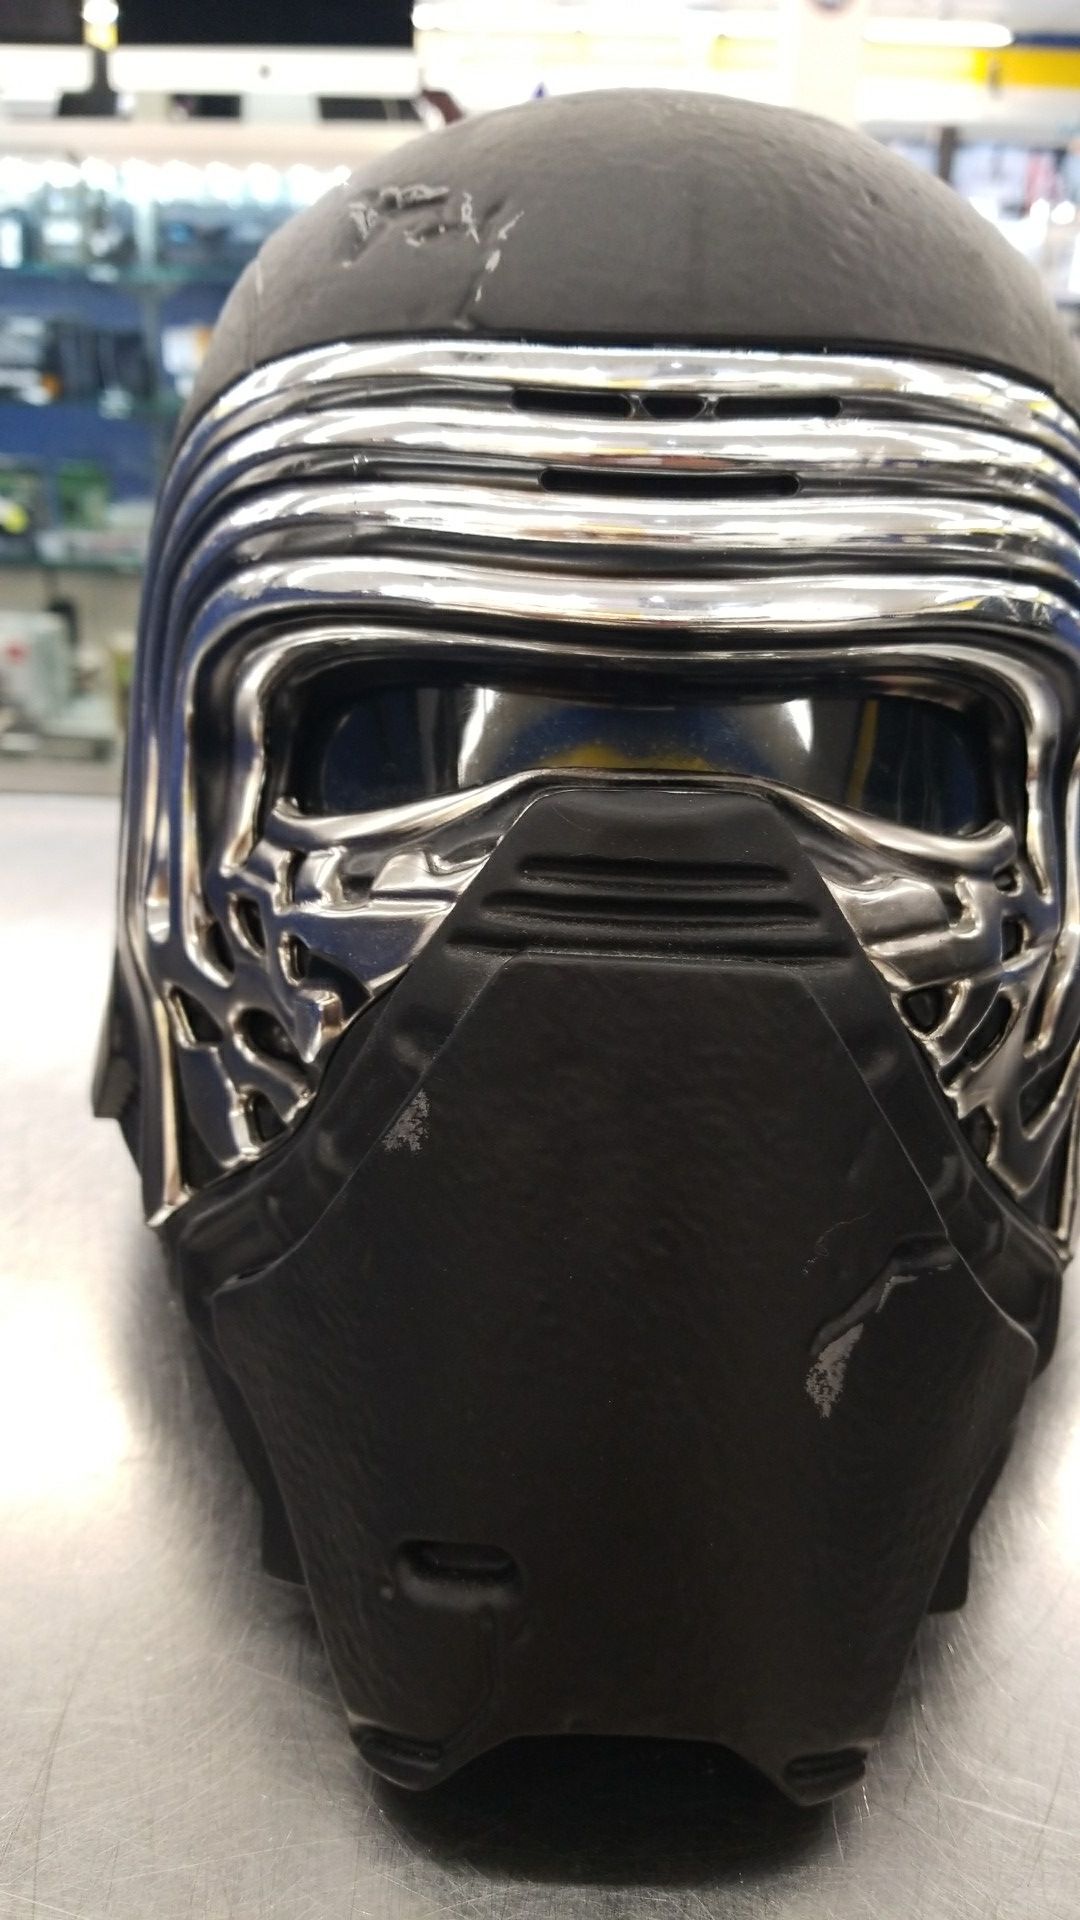 Kylo ren replica mask